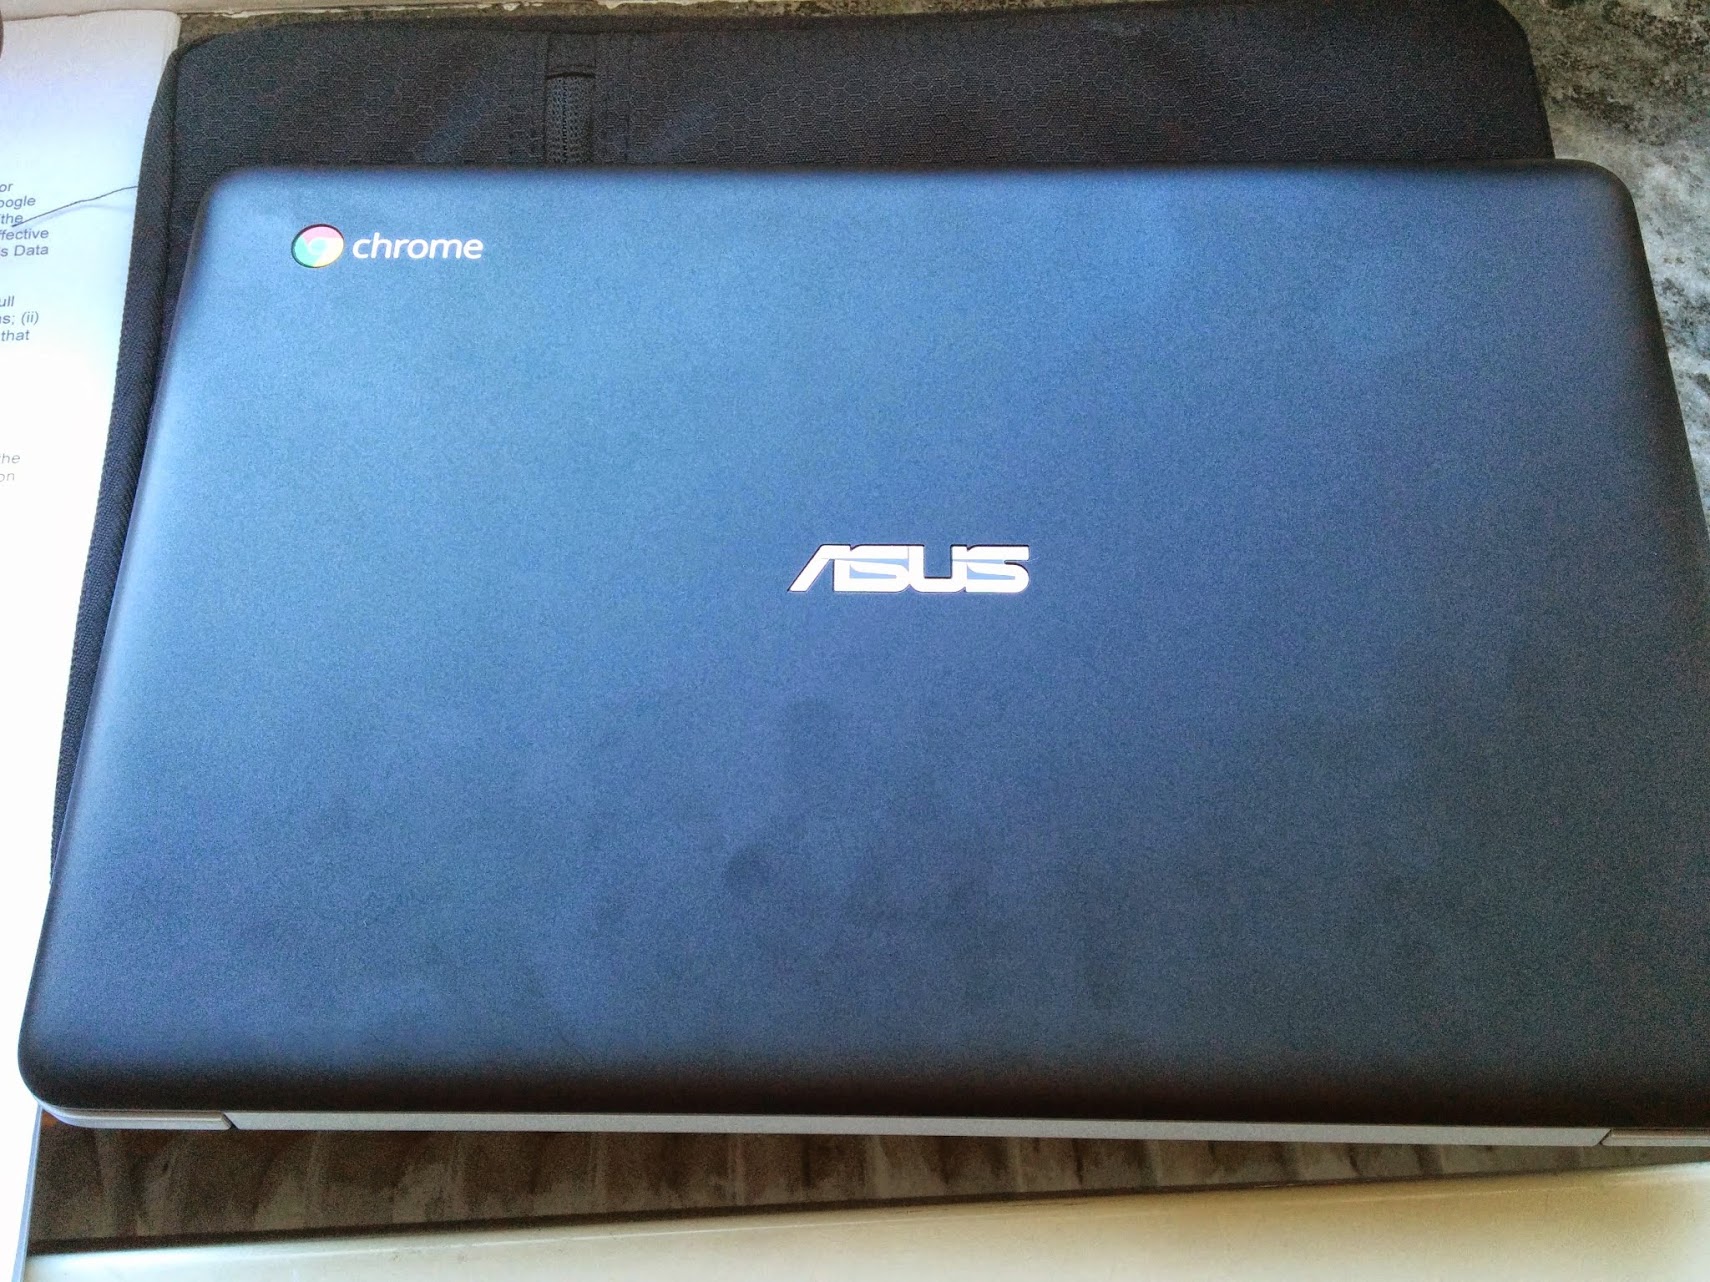 Asus_Chromebook_C200_3.jpg